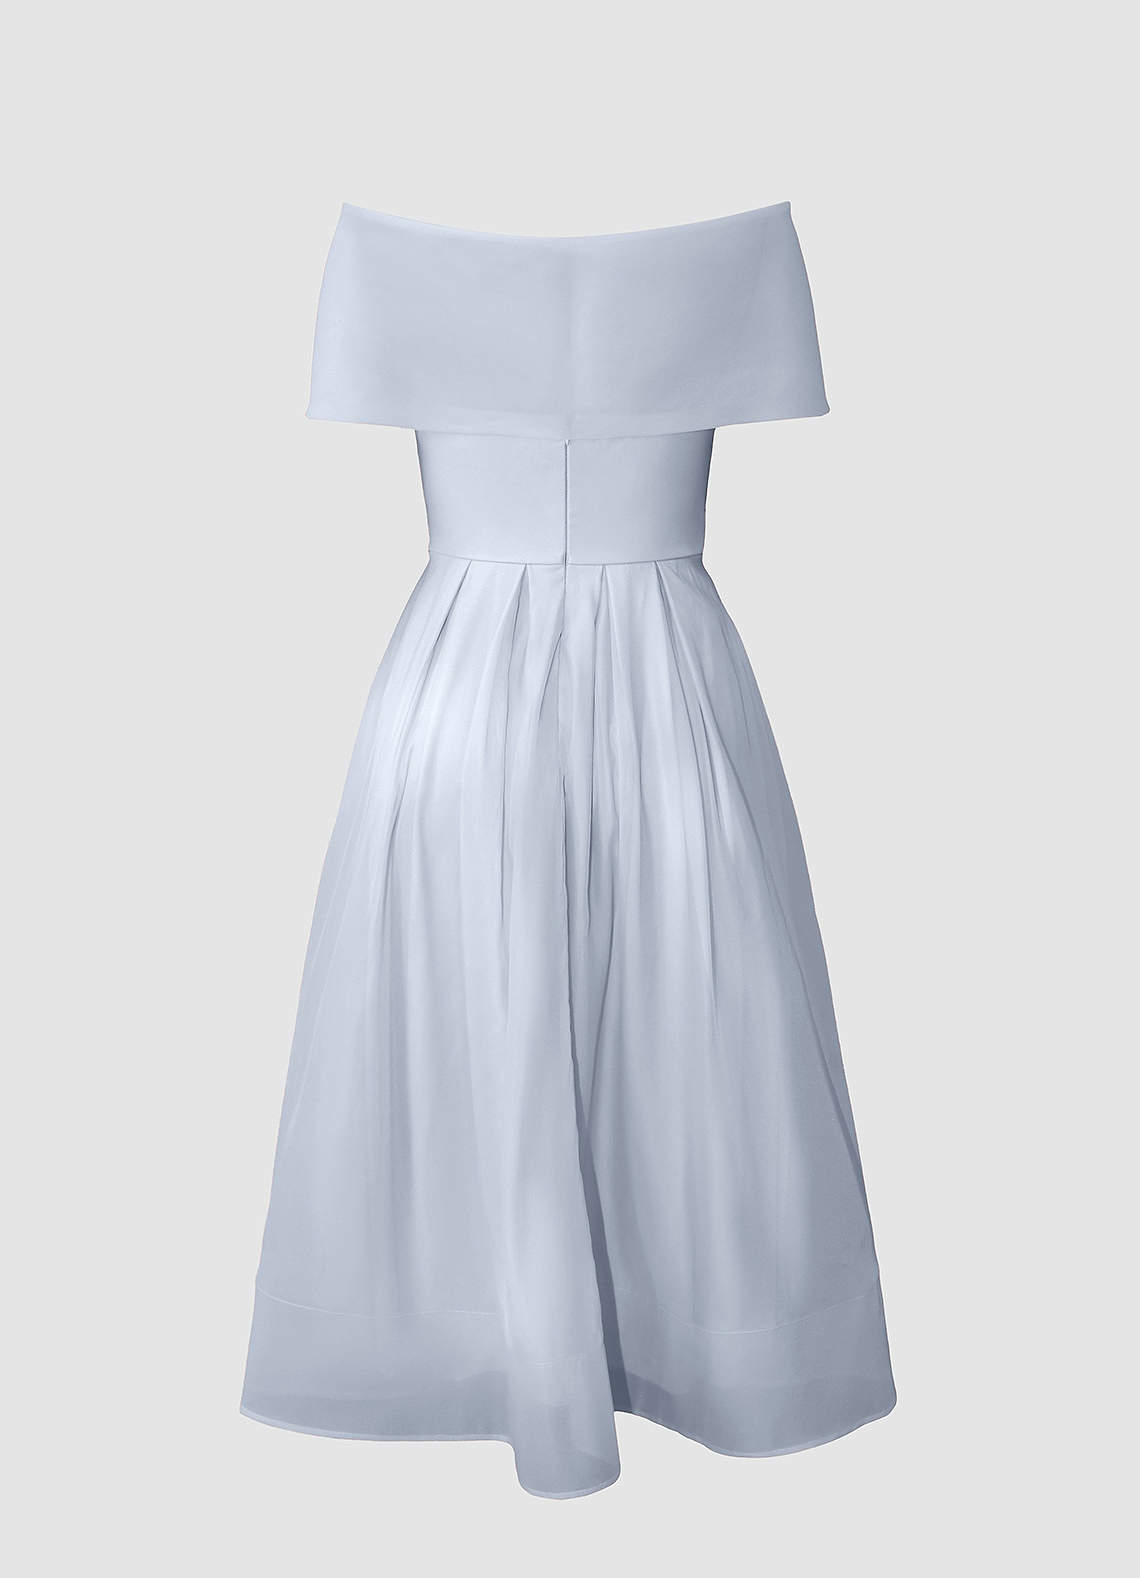 Dear To My Heart Light Blue Off-The-Shoulder Midi Dress image1